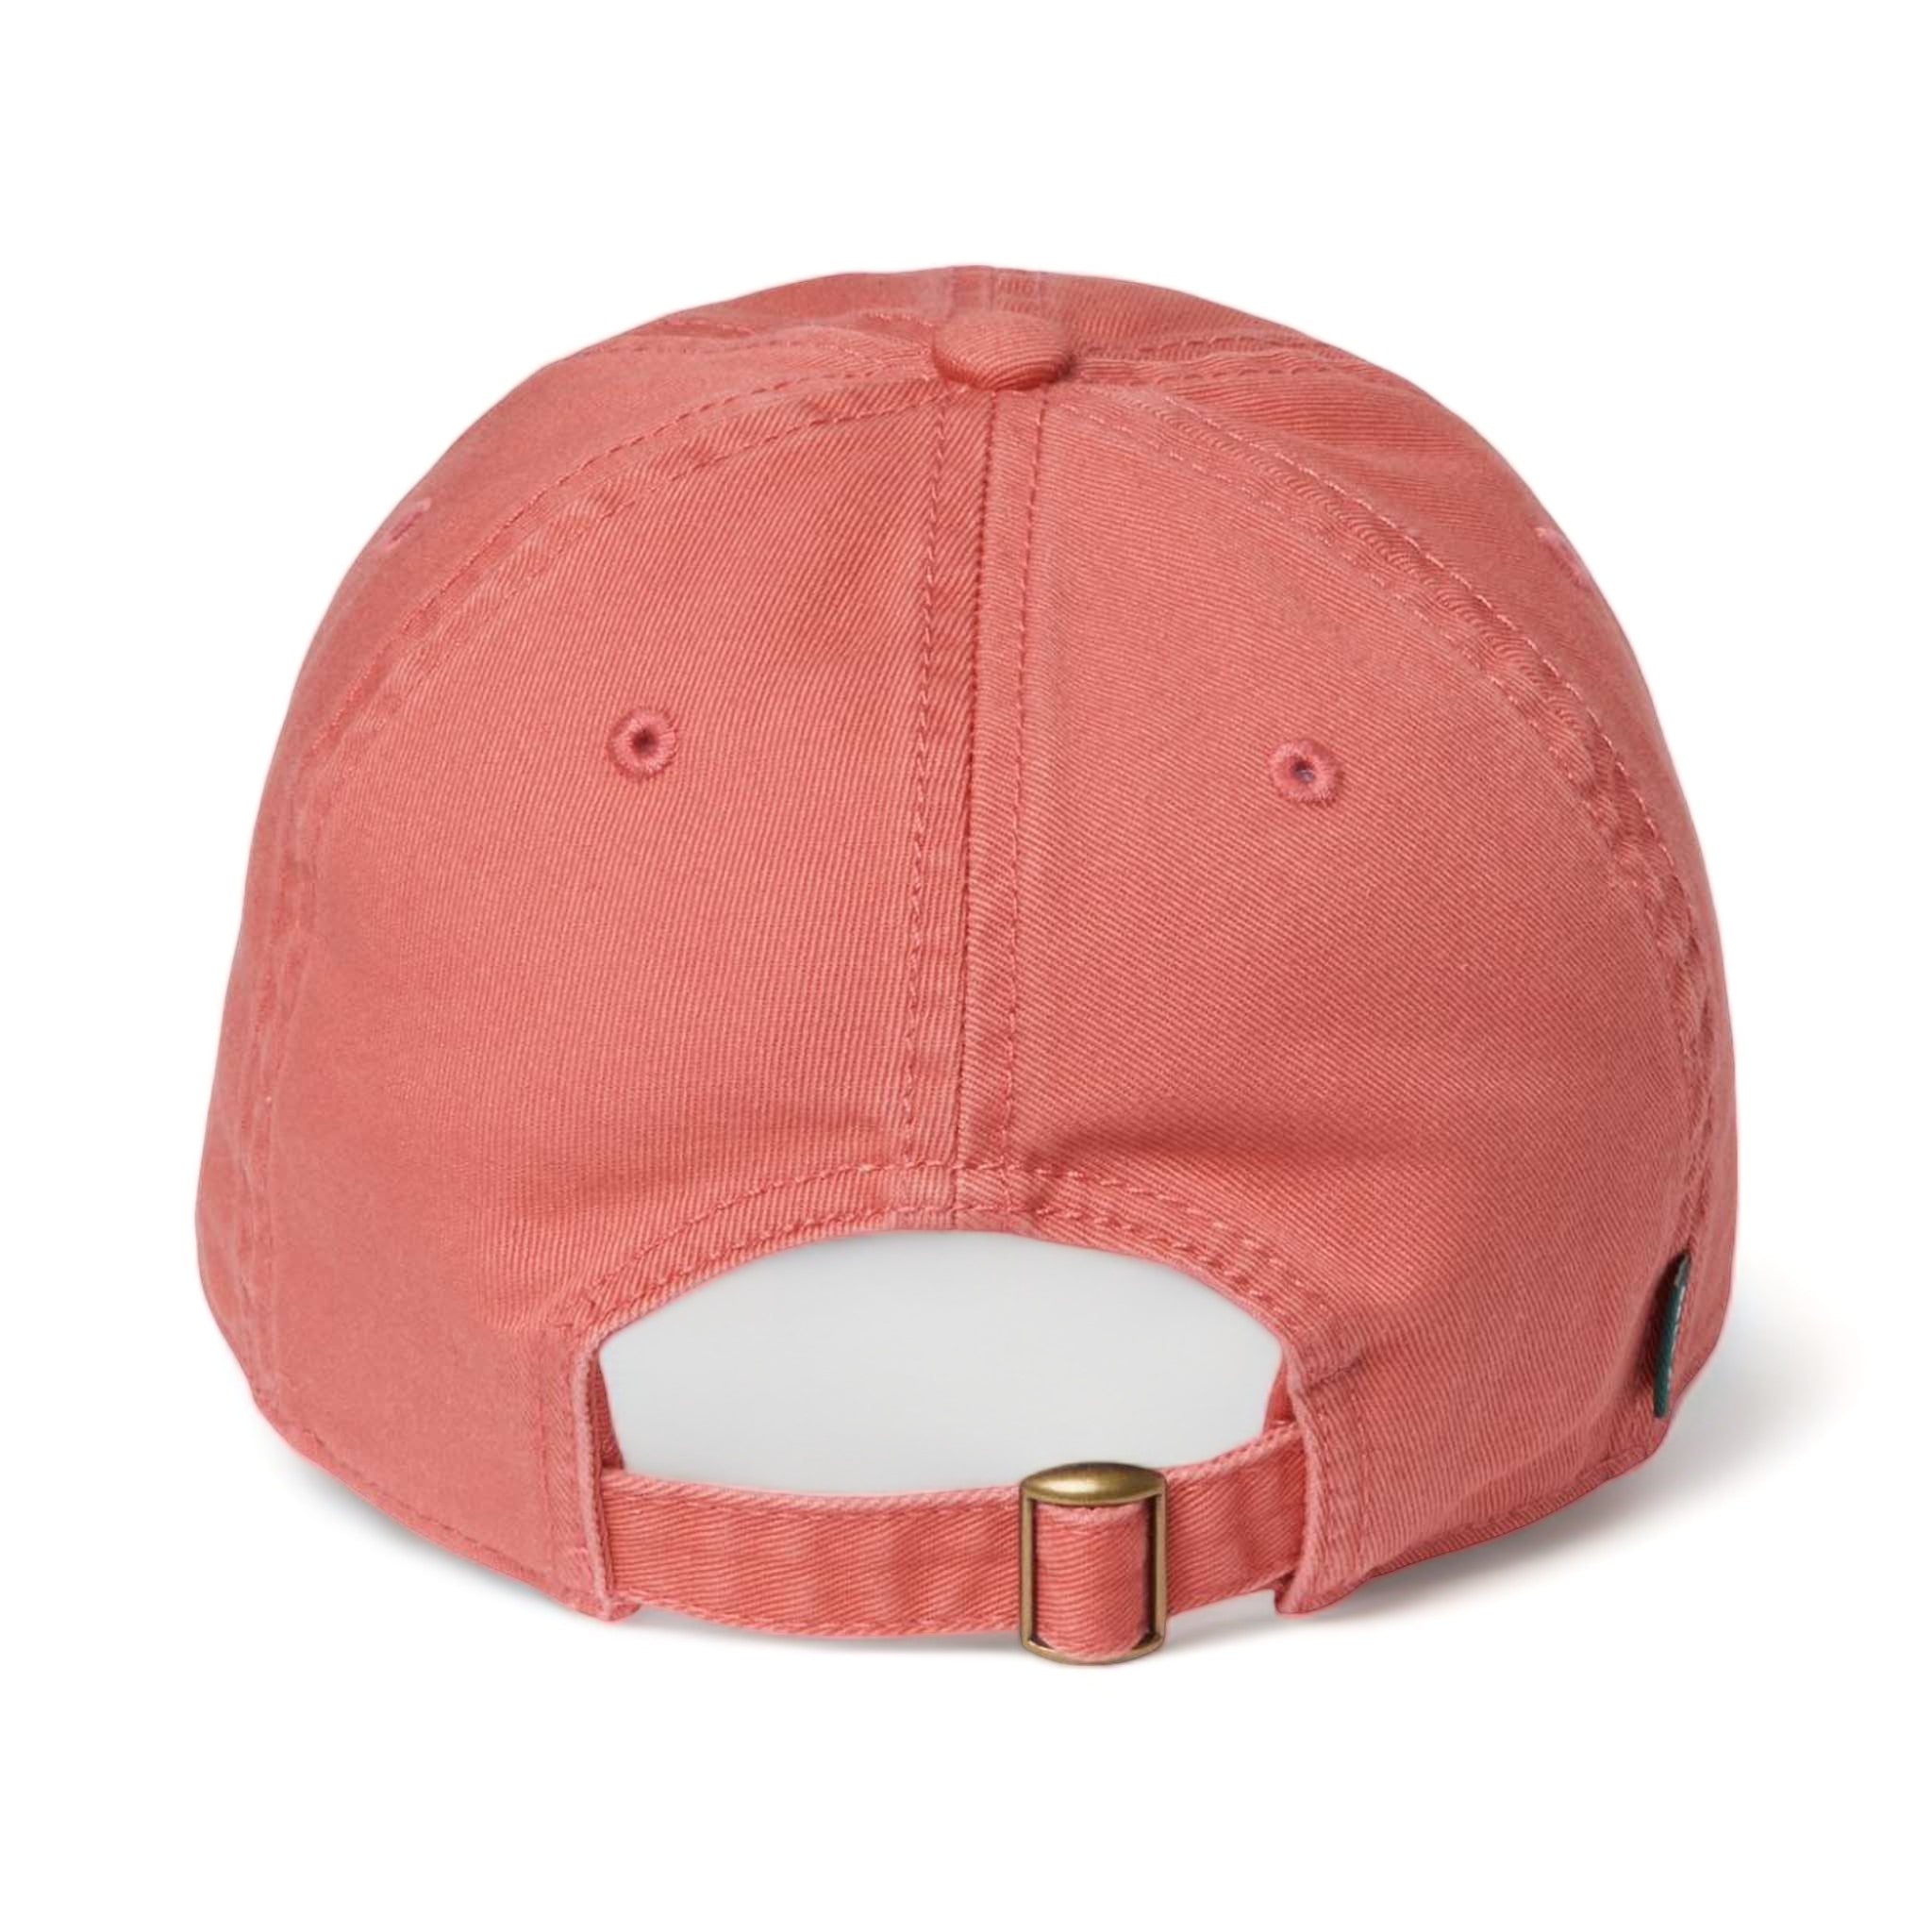 Back view of LEGACY EZA custom hat in nantucket red